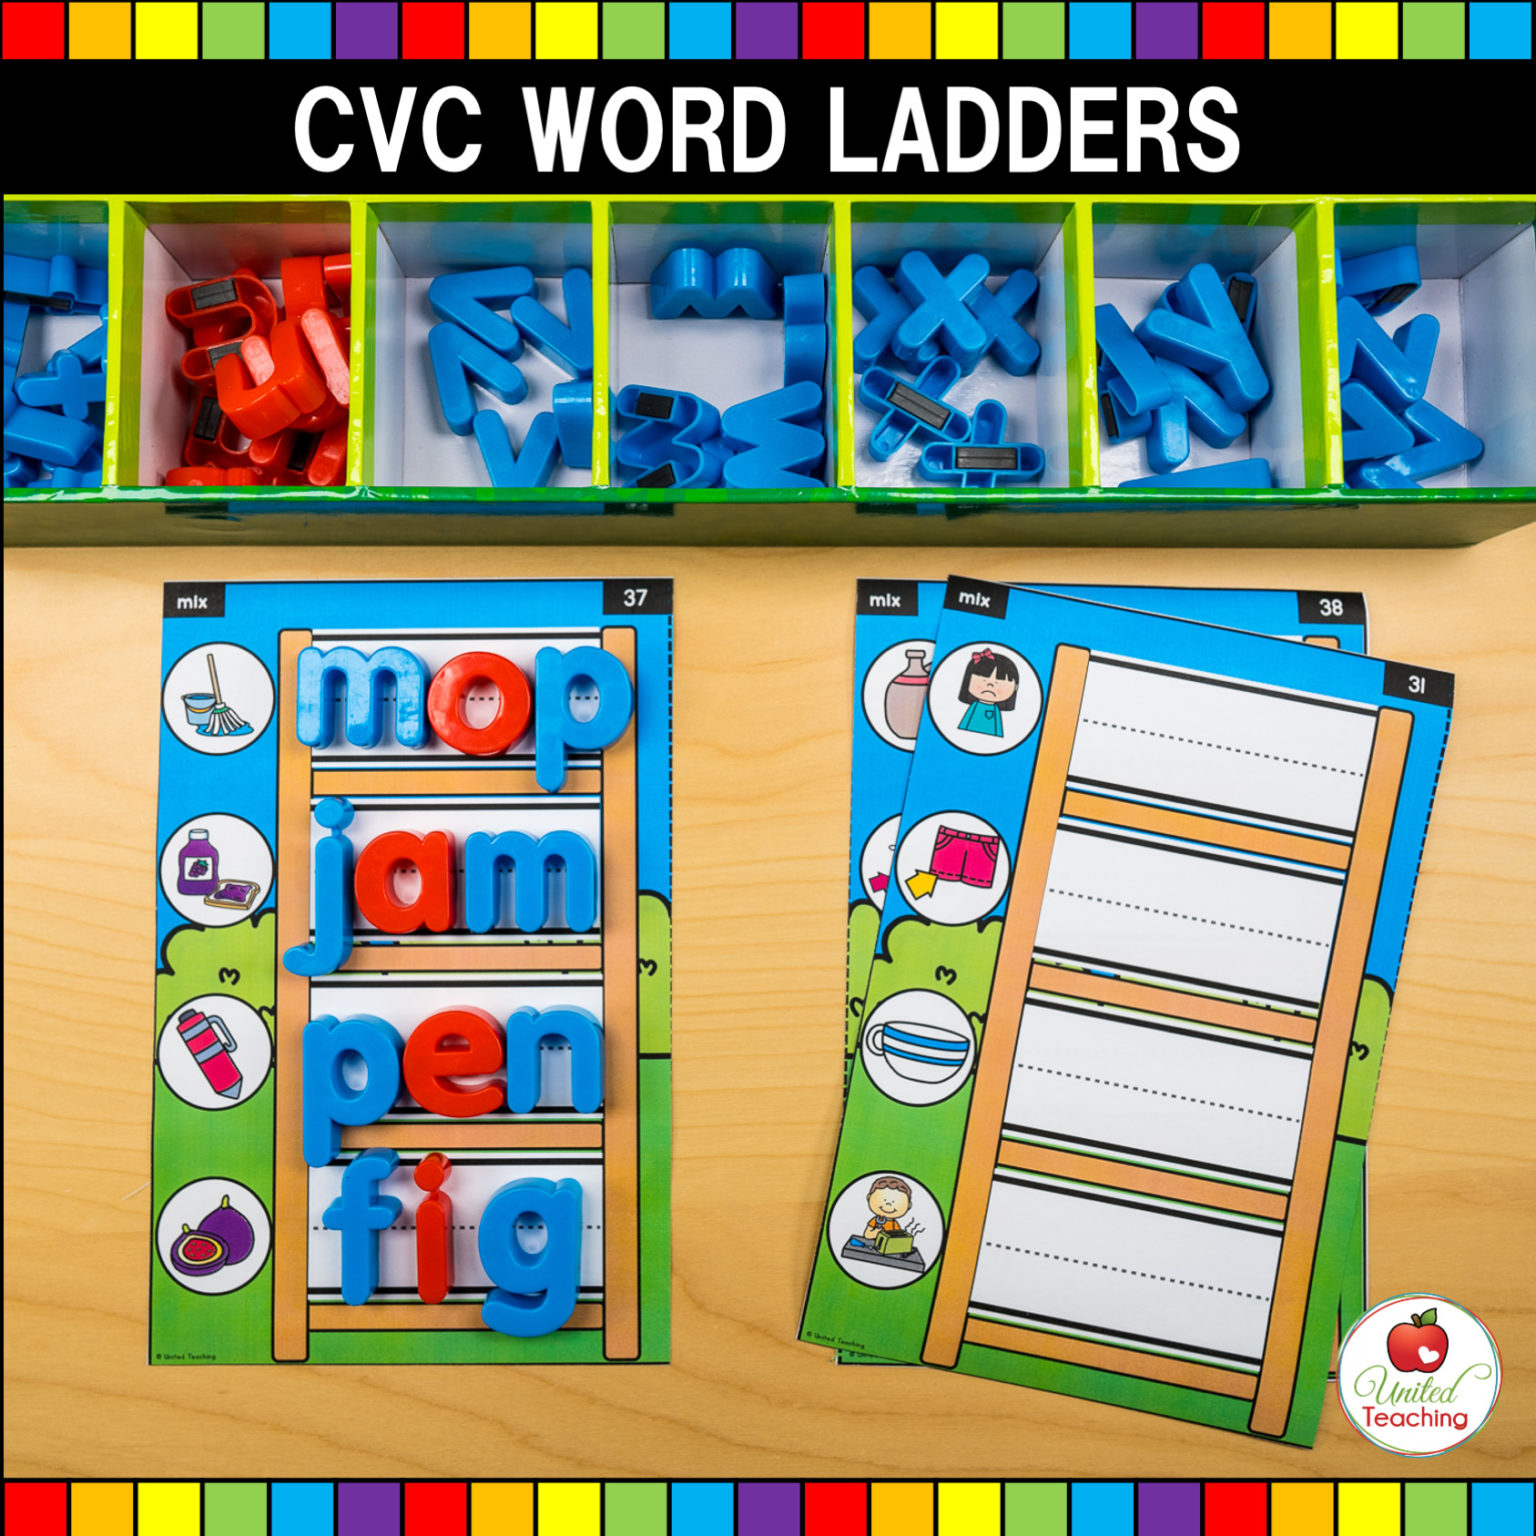 cvc-word-ladders-united-teaching